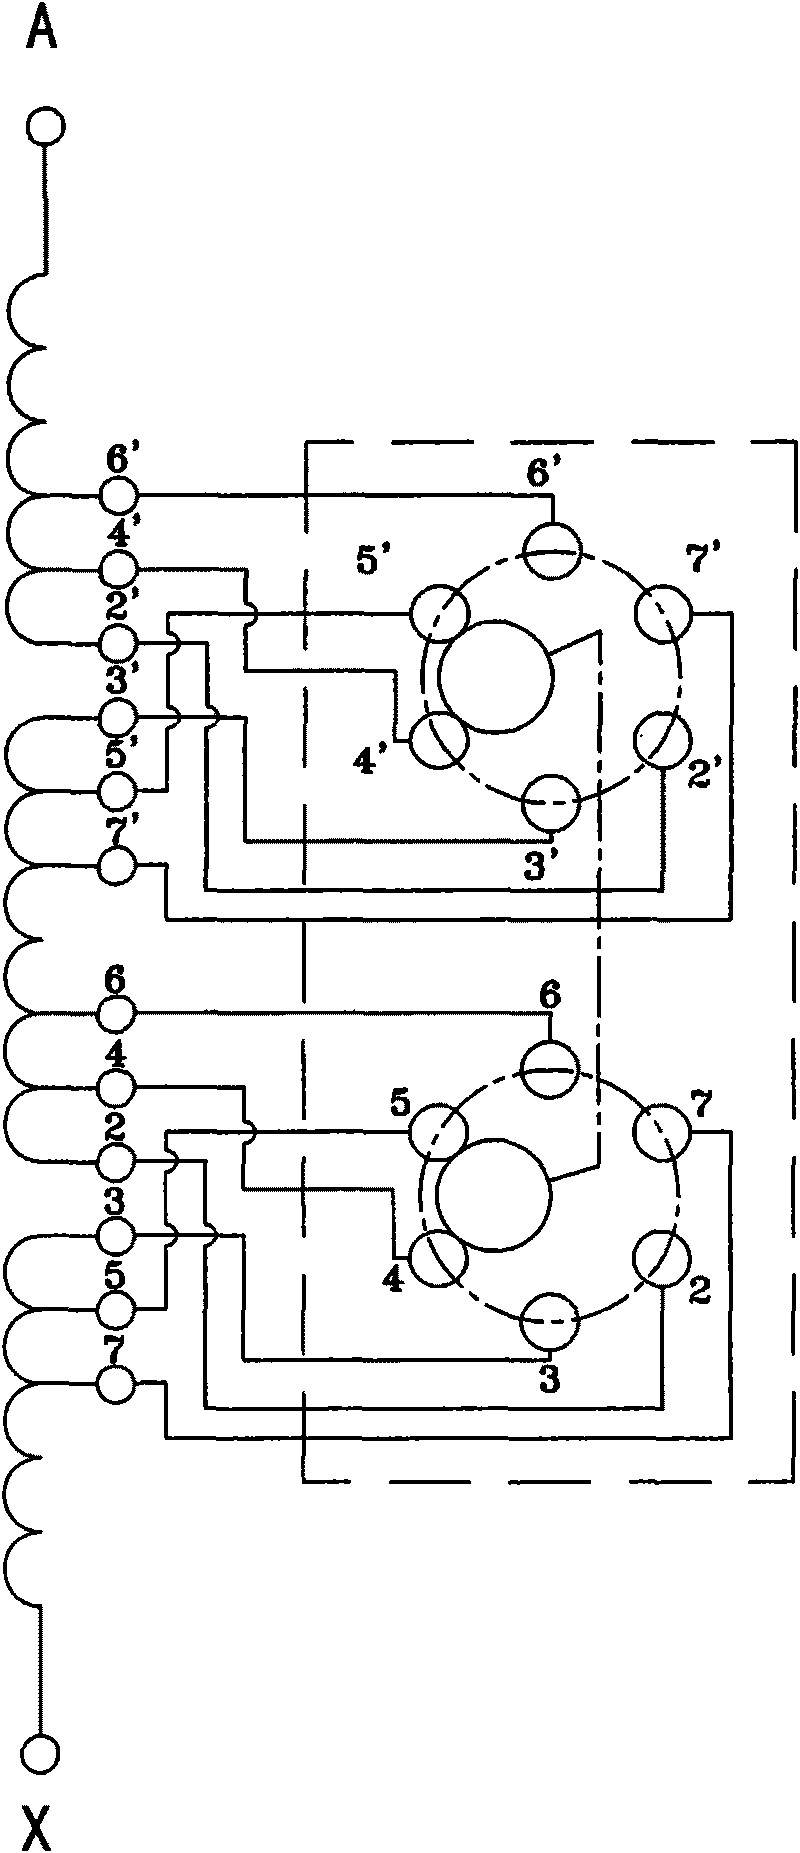 Linked voltage regulation non-excitation tap switch